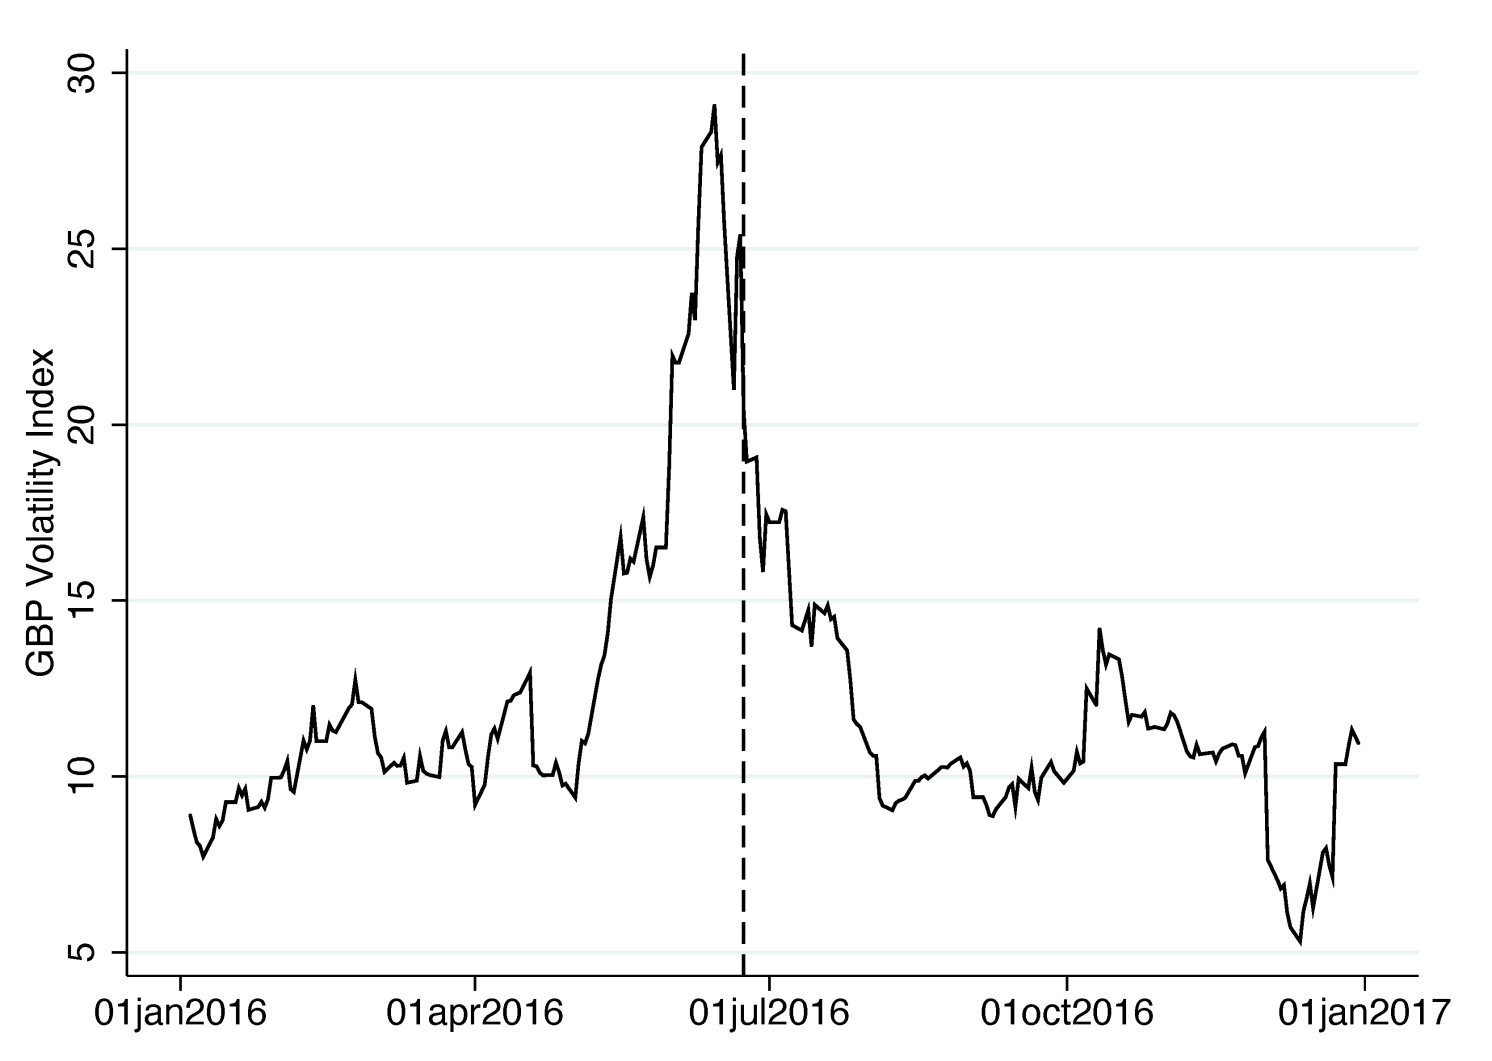 Figure 1a Exchange Rate Volatility Index